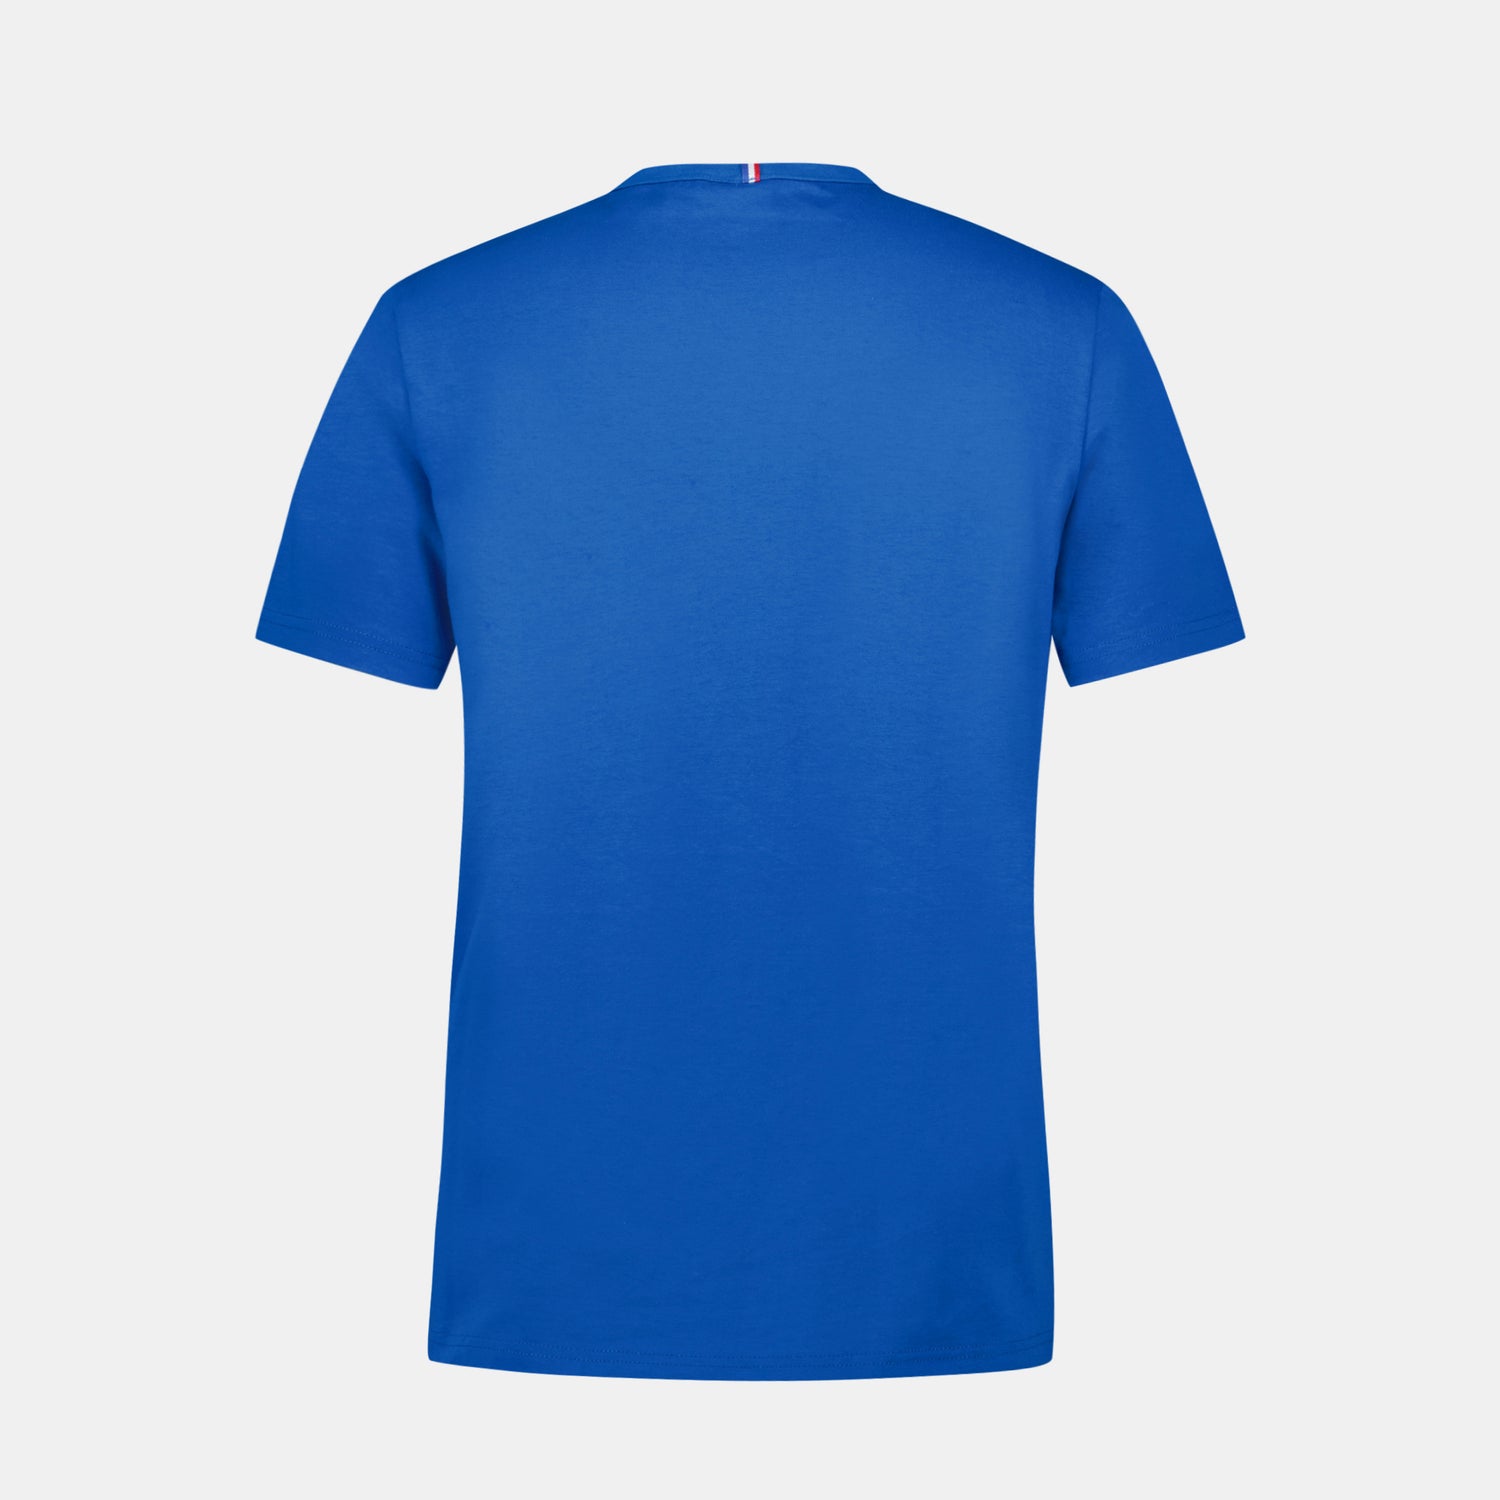 2410213-SAISON 1 Tee SS N°2 M lapis blue | T-shirt Unisexe